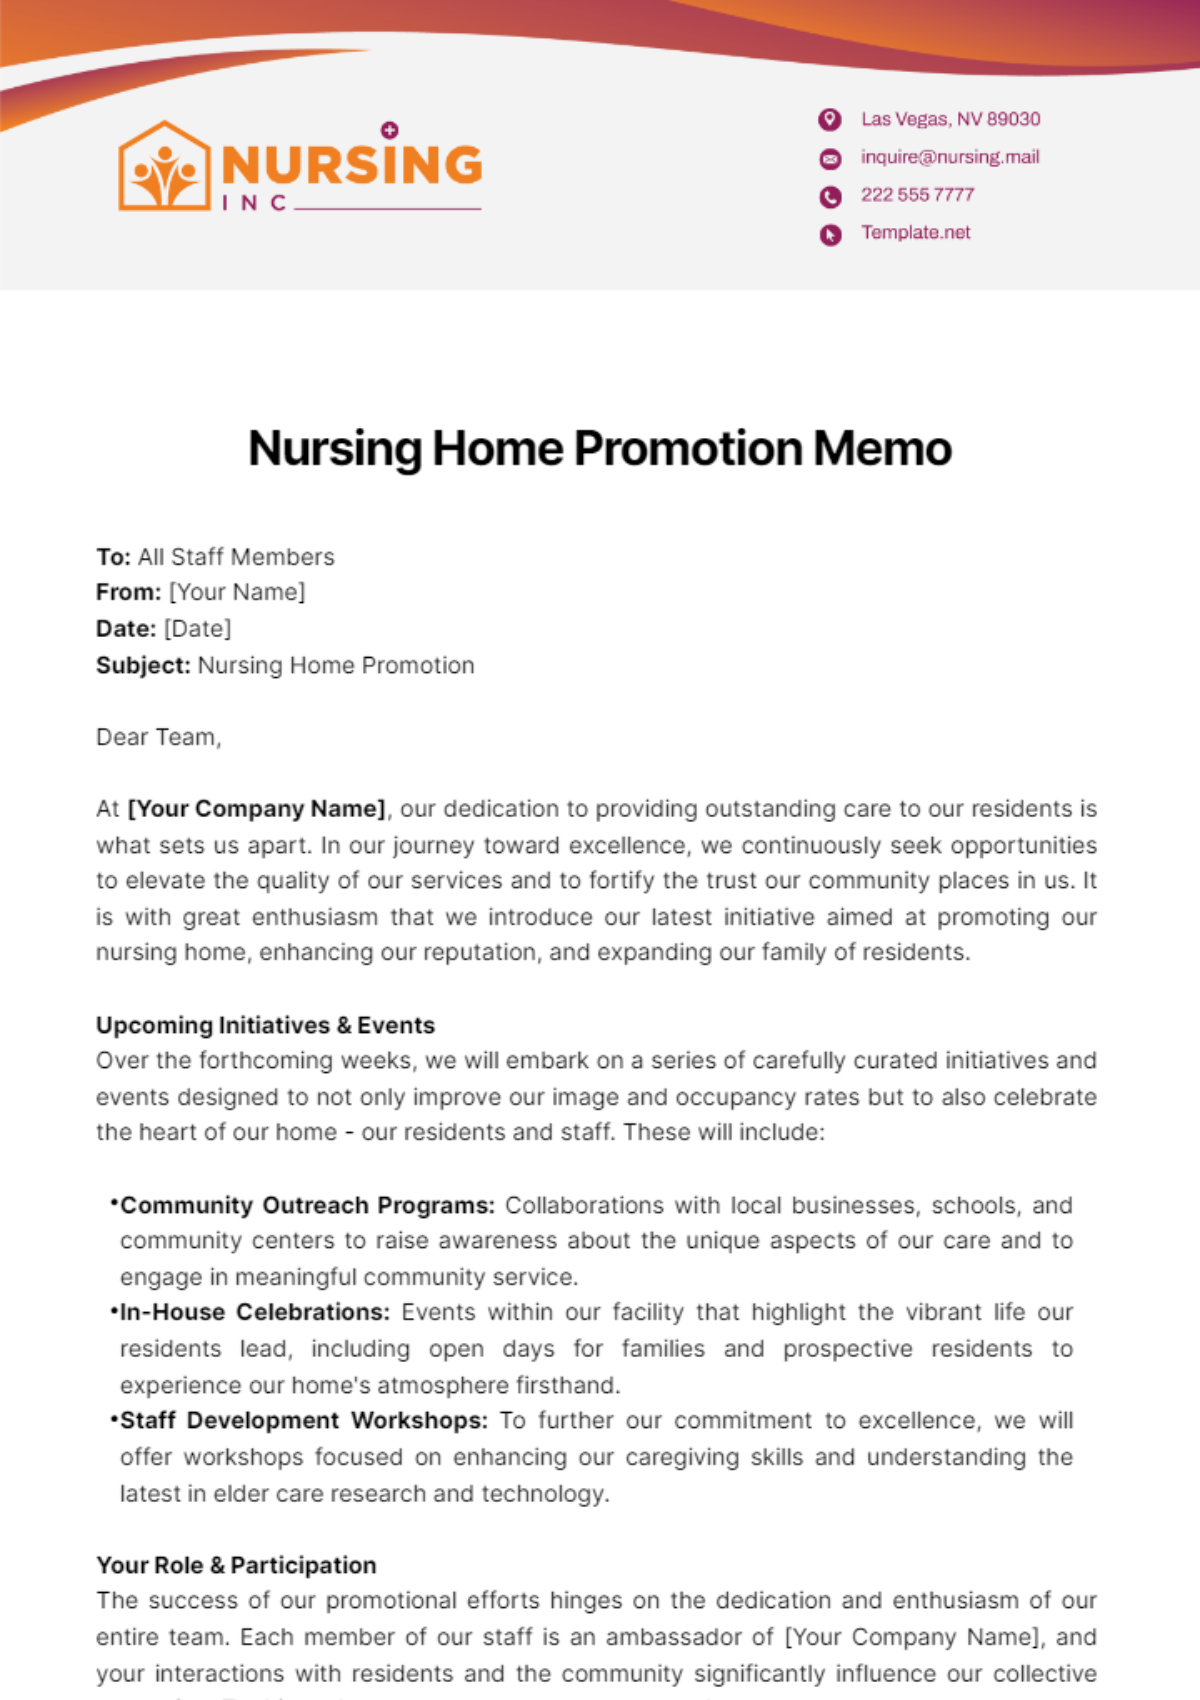 Free Nursing Home Promotion Memo Template